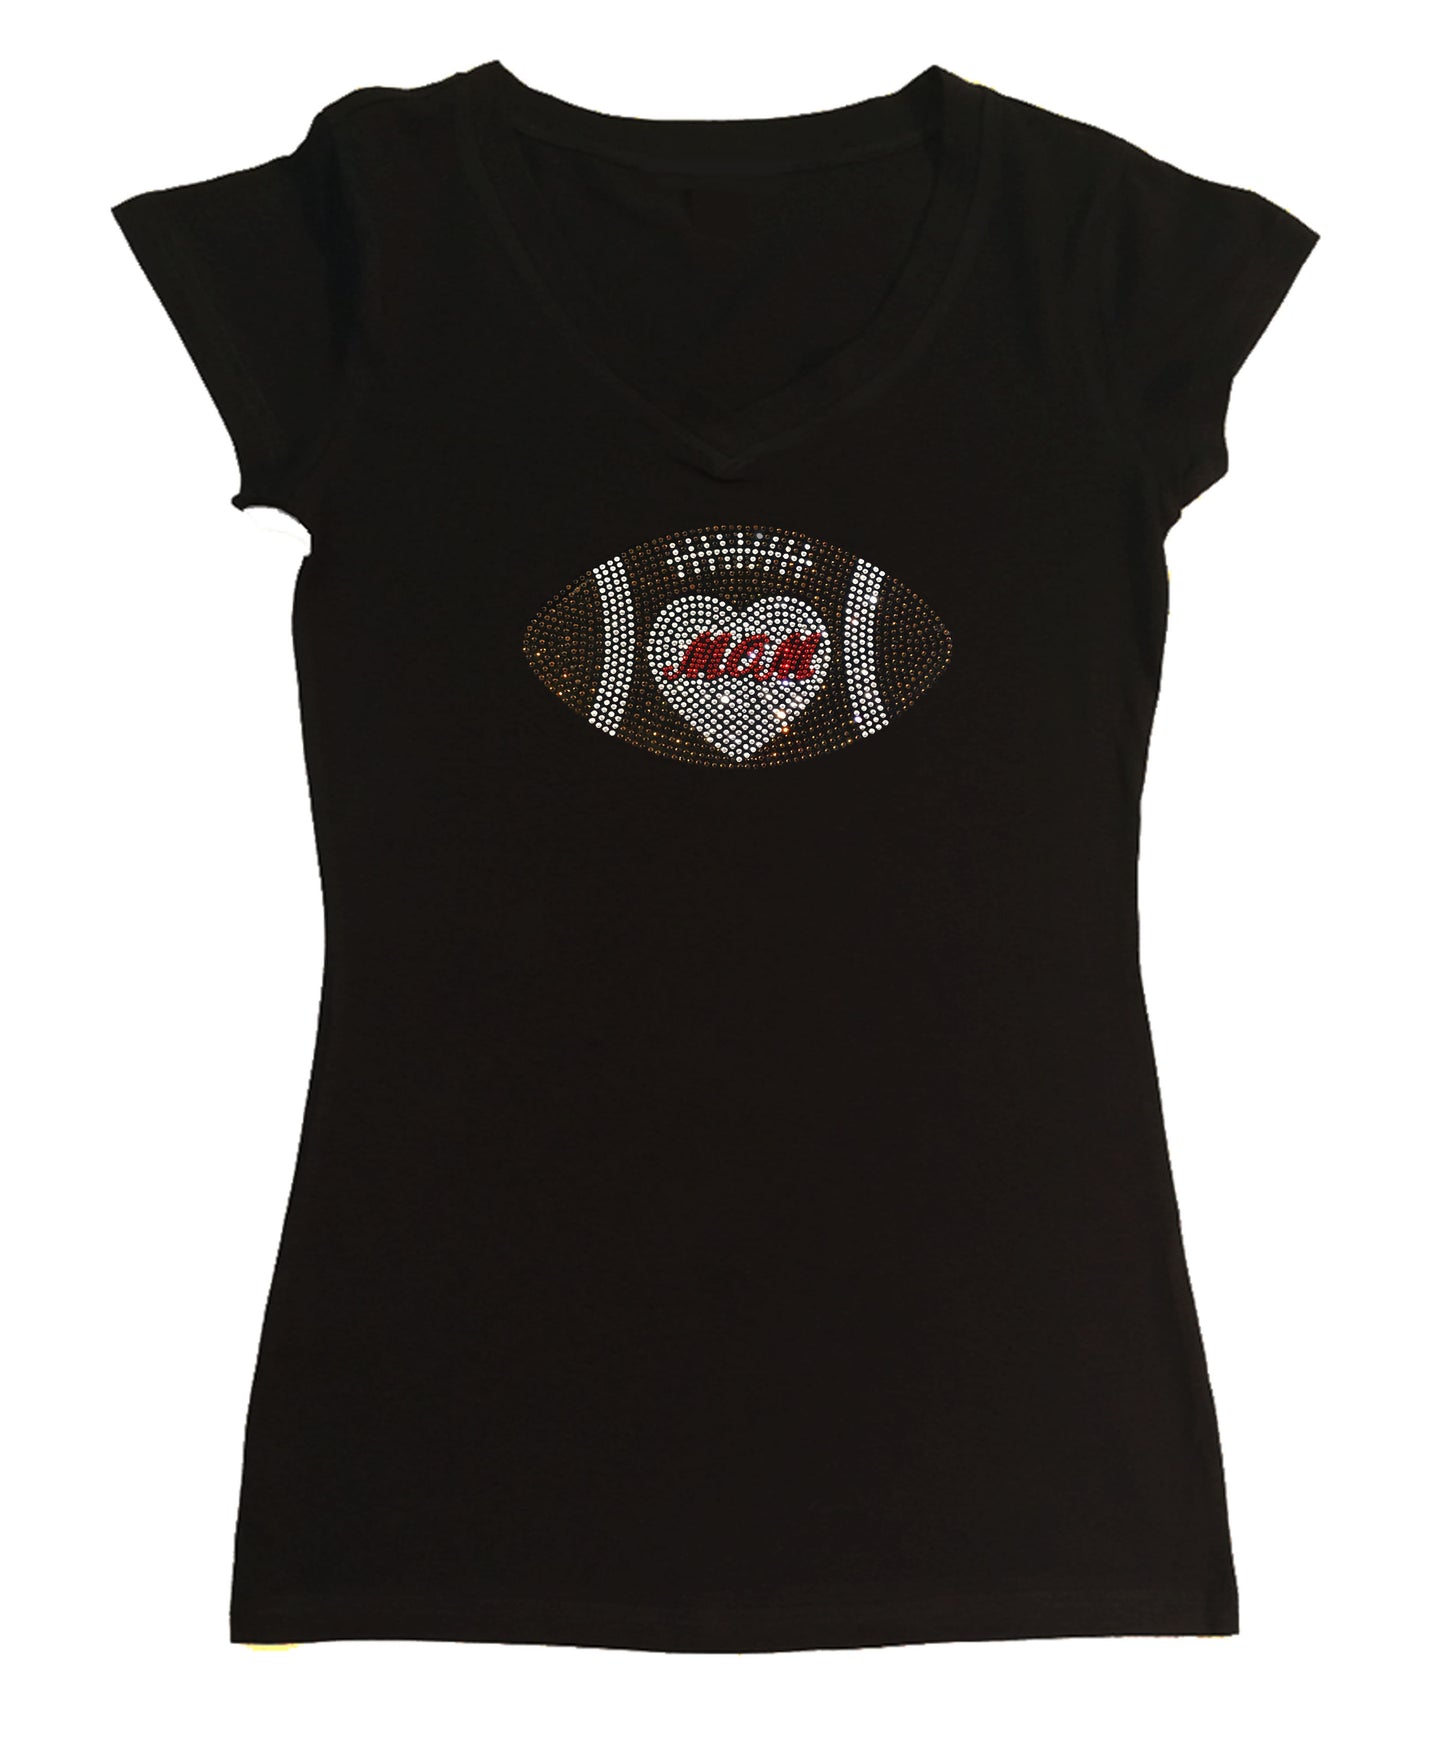 Womens T-shirt with Football Mom Heart in Rhinestones